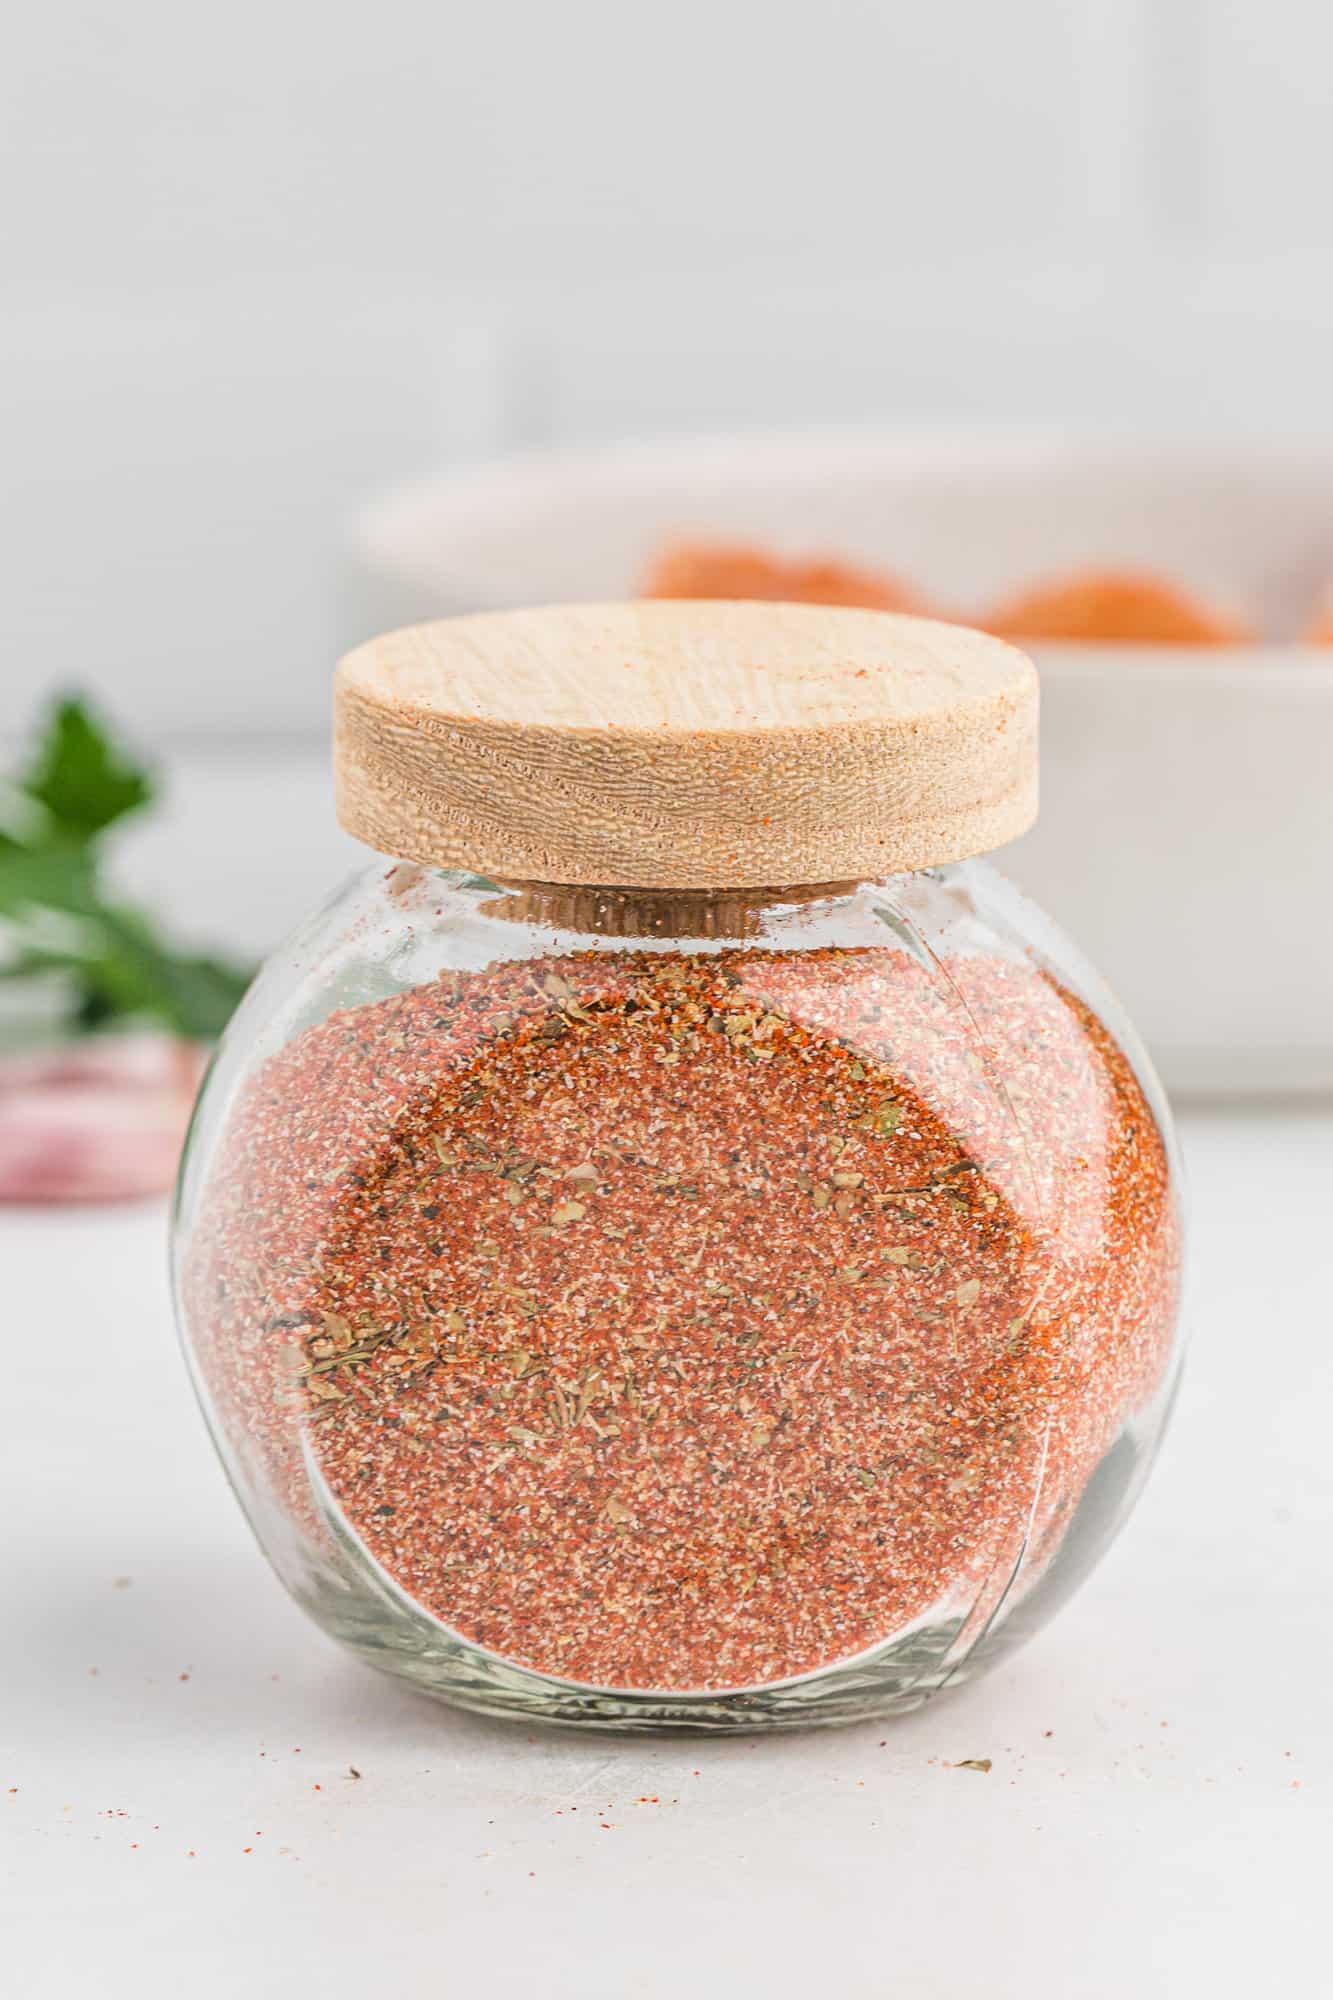 Spice mix in a jar.